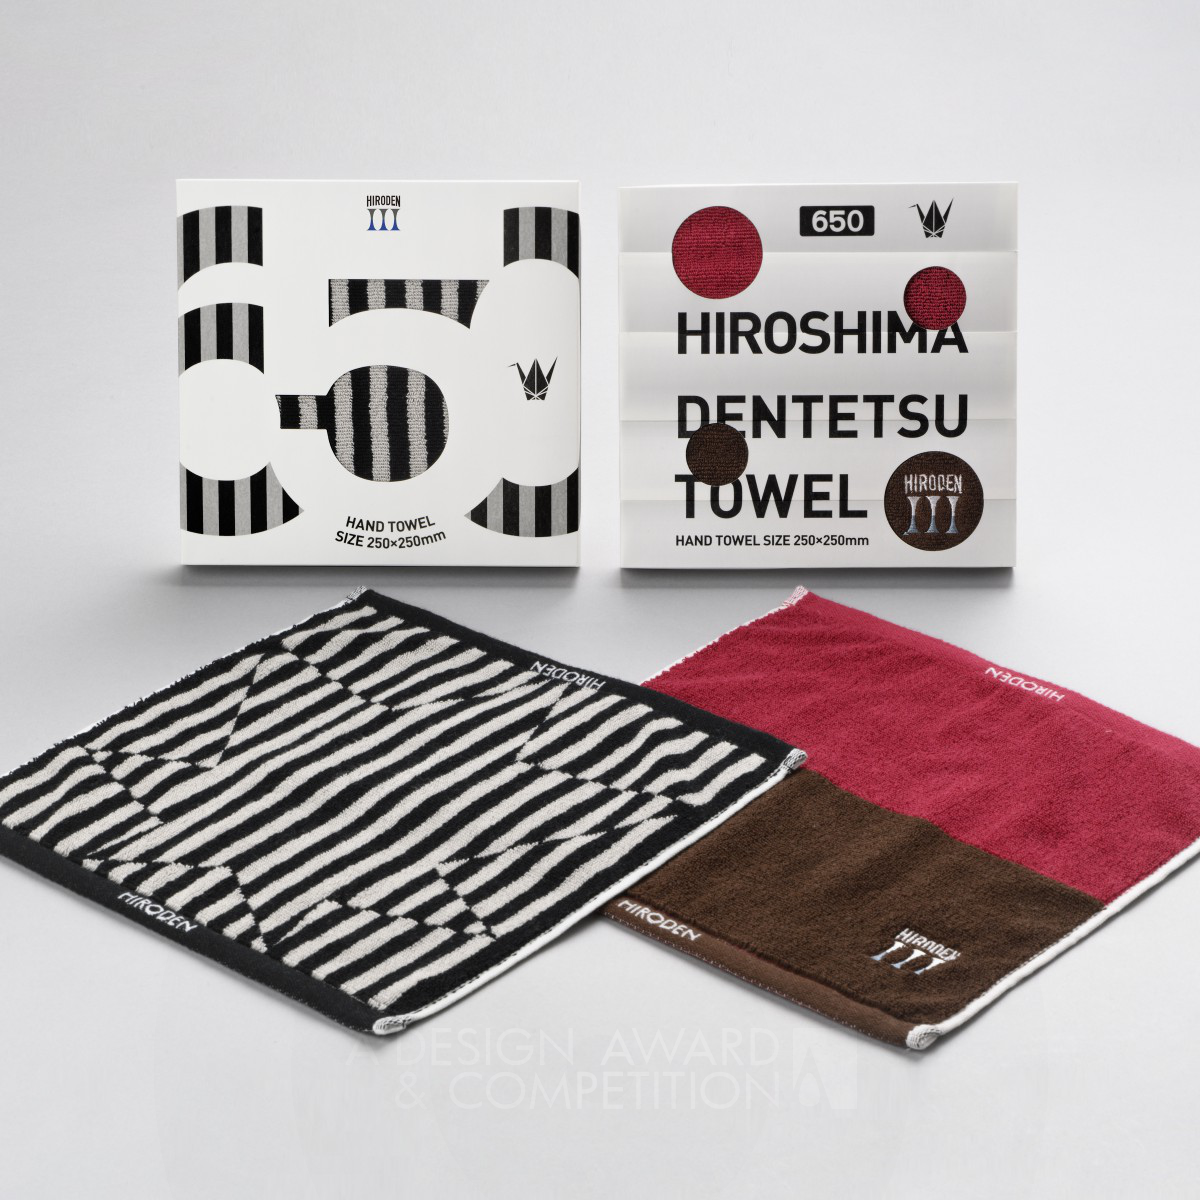 Hajime Tsushima wins Bronze at the prestigious A' Packaging Design Award with Hiroshima Dentetsu Hand Towel.